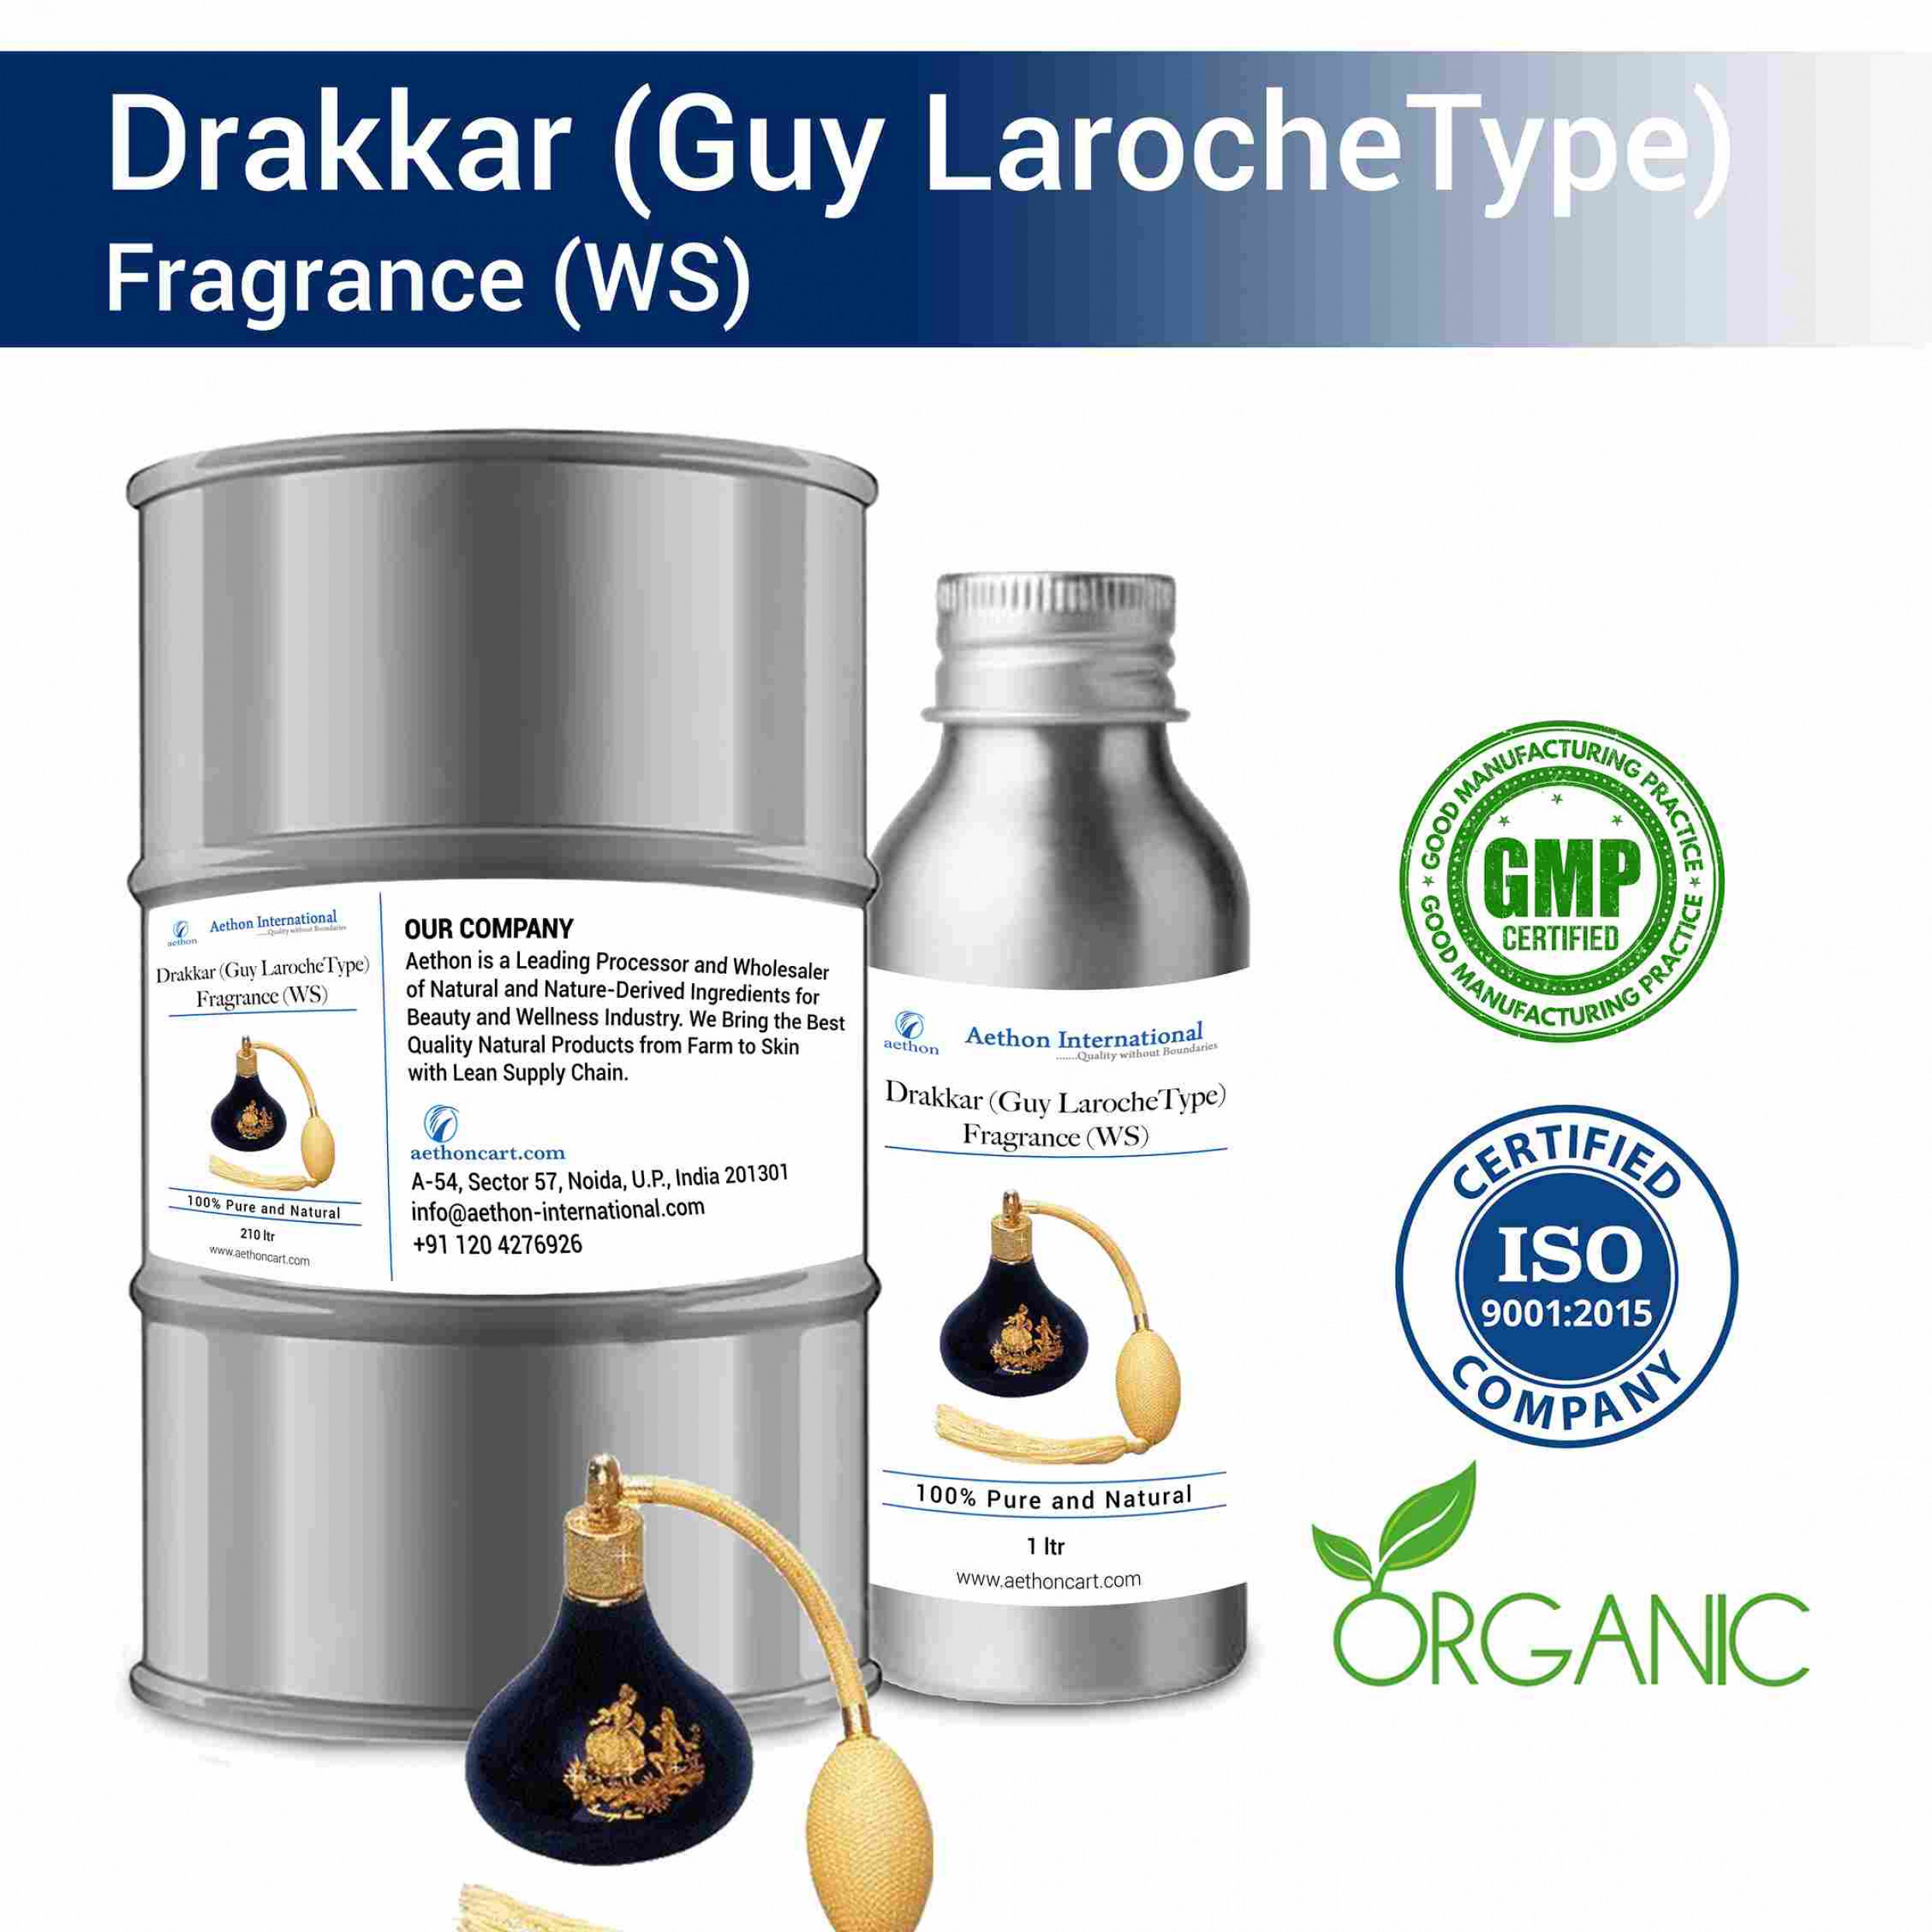 Drakkar (Guy LarocheType) Fragrance (WS)